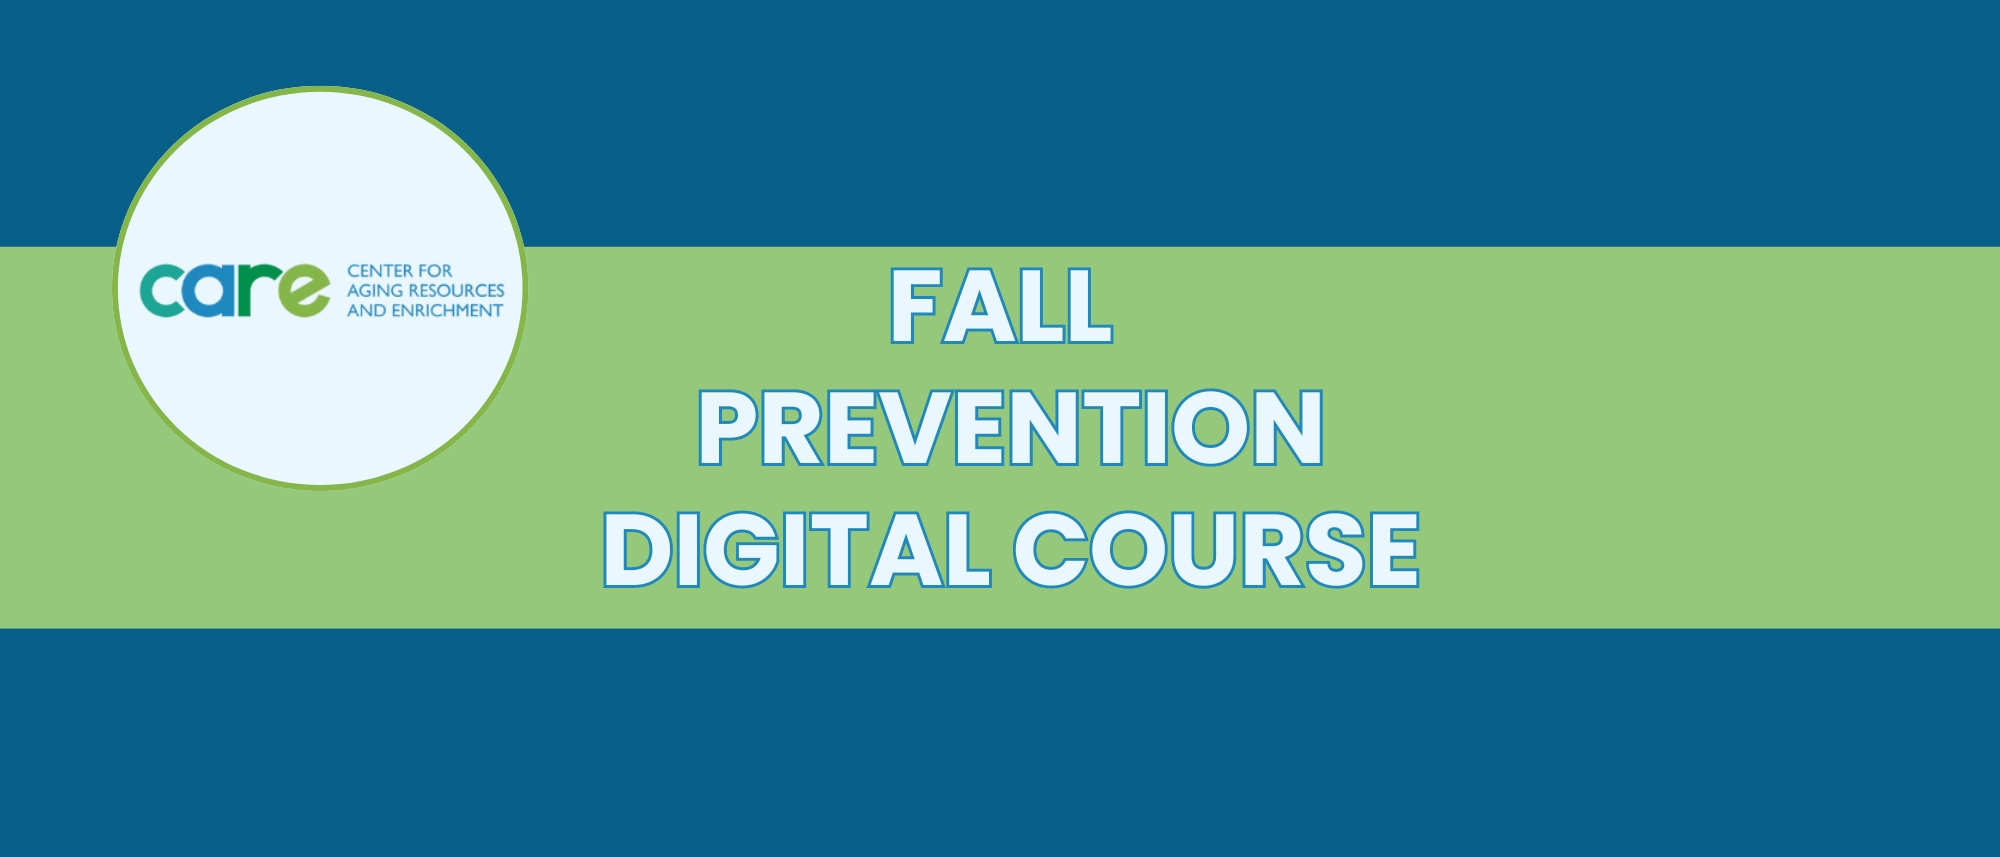 Fall Prevention Course